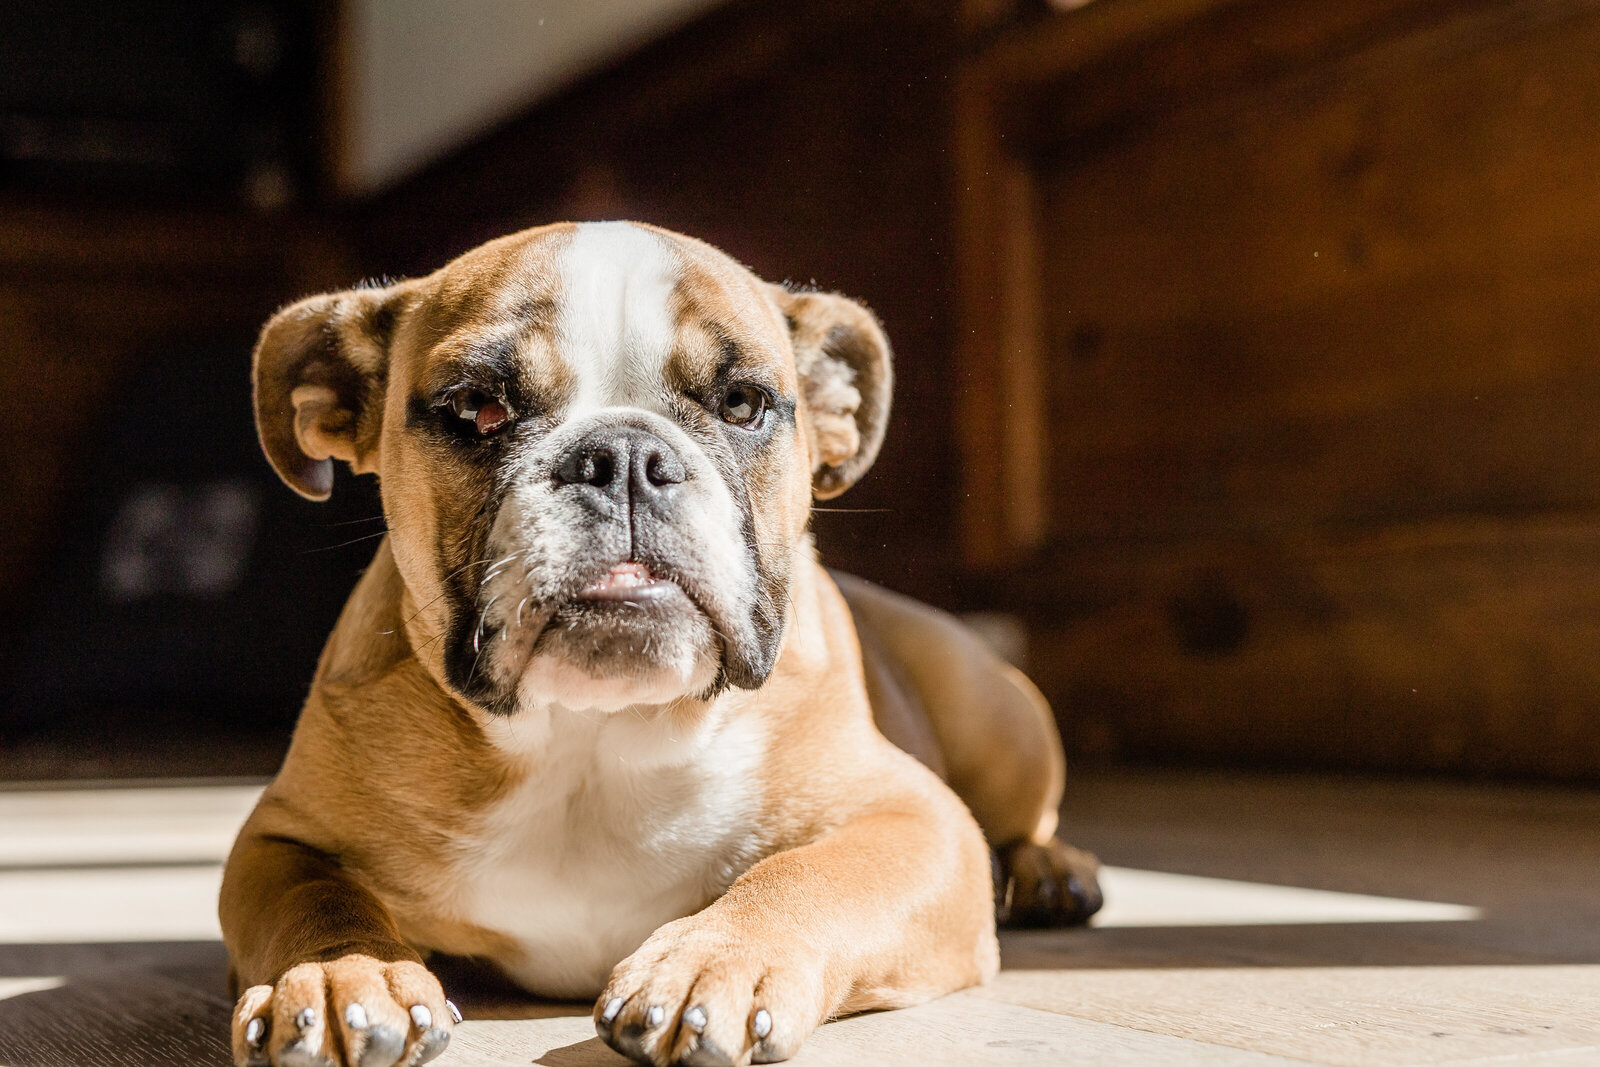 french bulldog basking in the sun on wood floor of living room